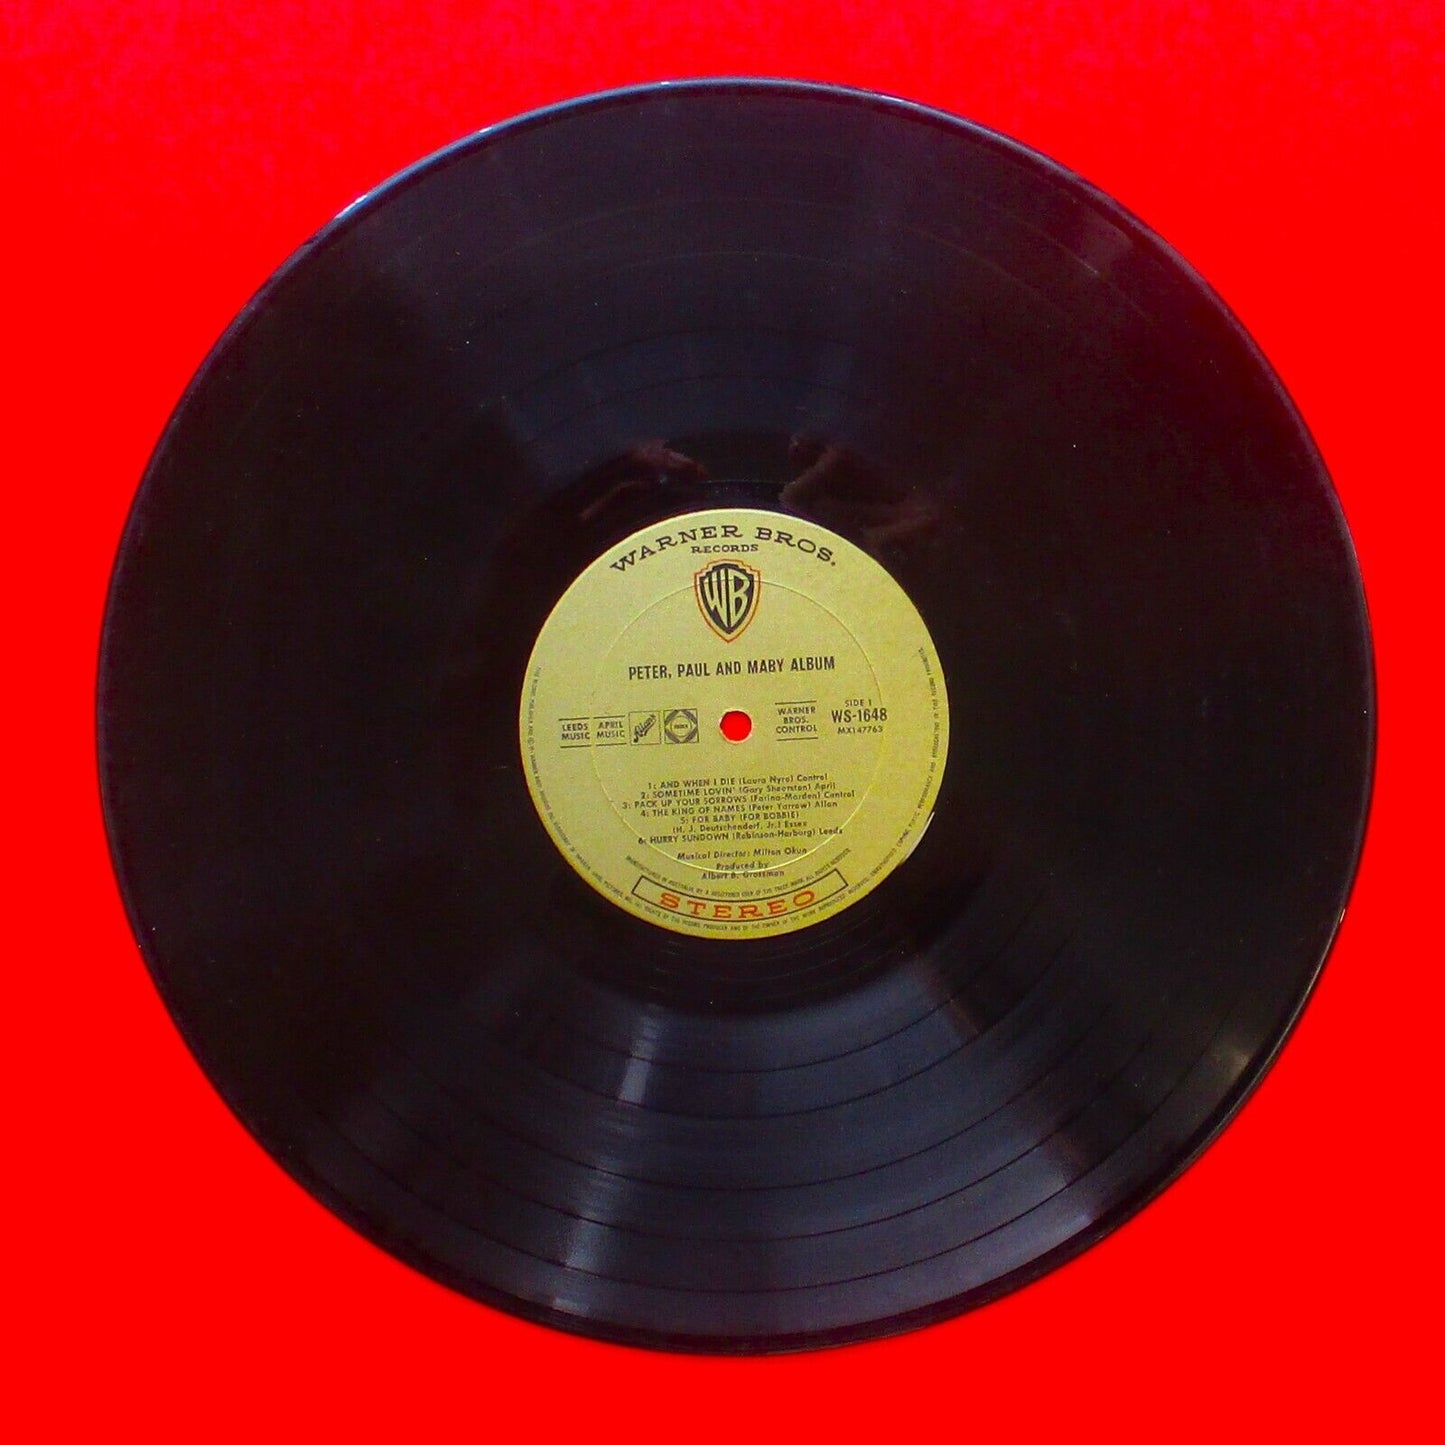 Peter, Paul And Mary Album Vinyl LP 1966 Gold Lable Australian Pressing